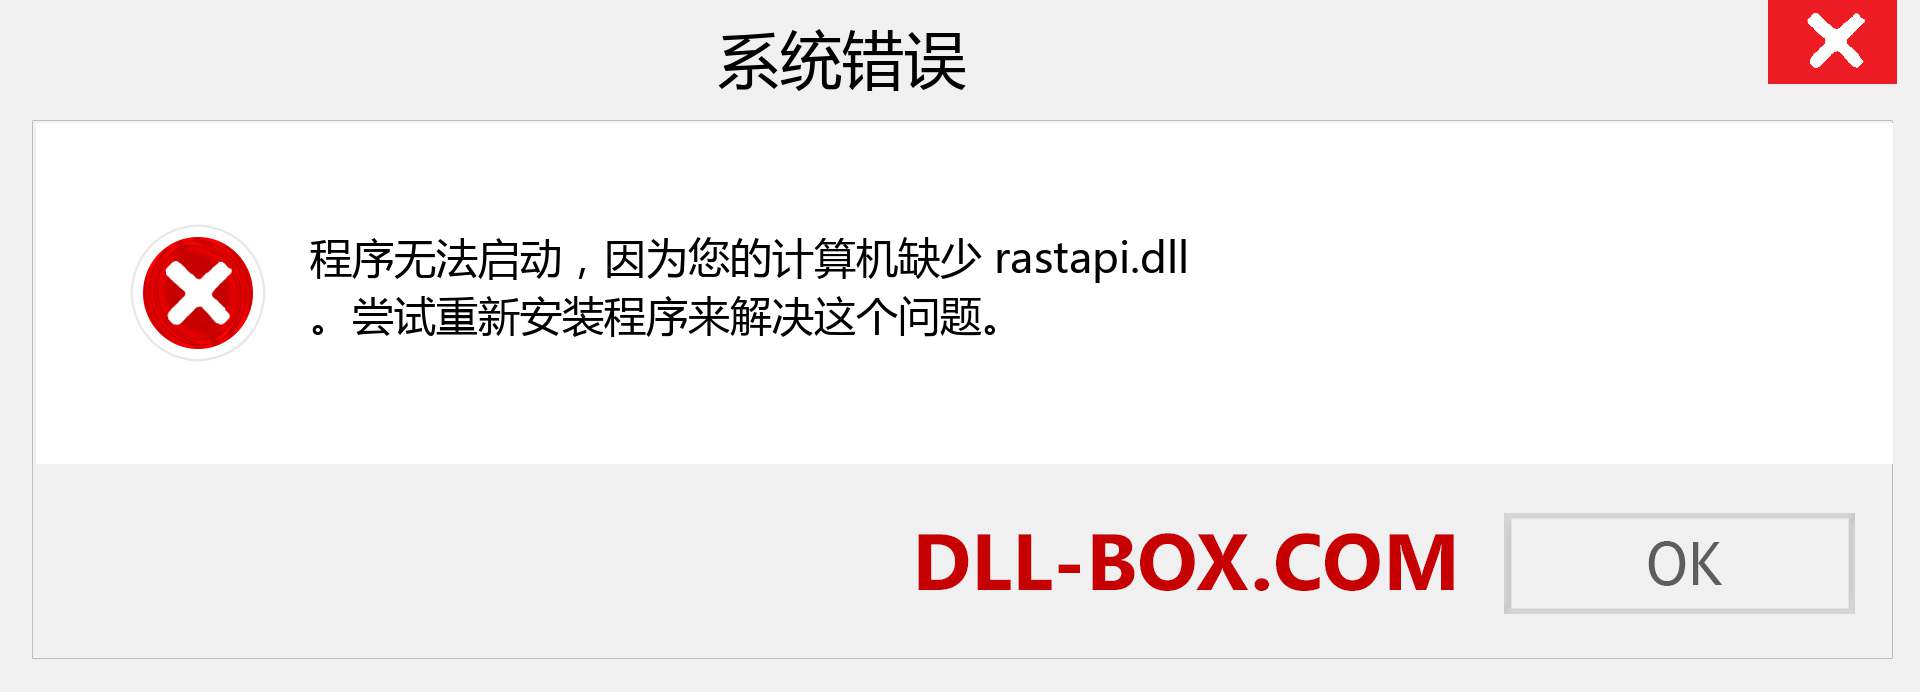 rastapi.dll 文件丢失？。 适用于 Windows 7、8、10 的下载 - 修复 Windows、照片、图像上的 rastapi dll 丢失错误